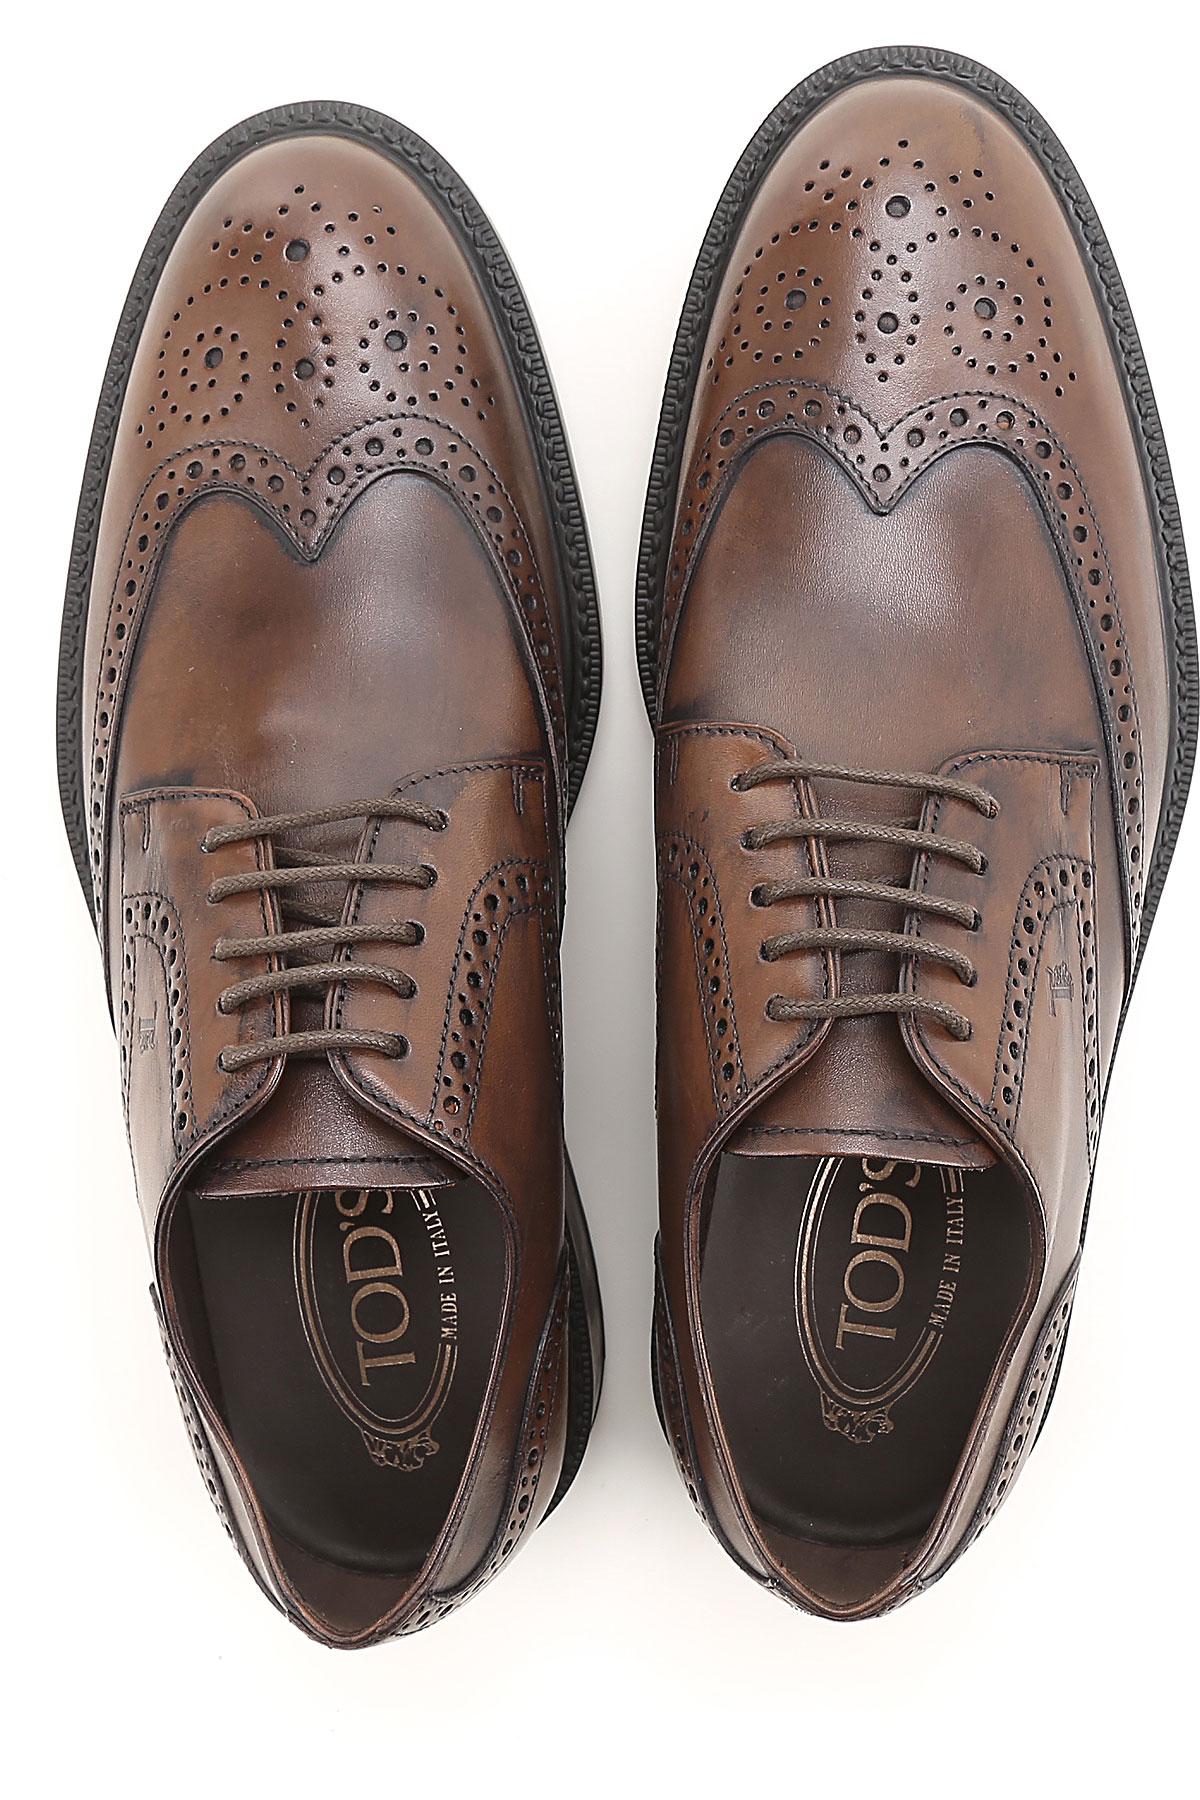 Lyst - Tod'S Shoes For Men for Men